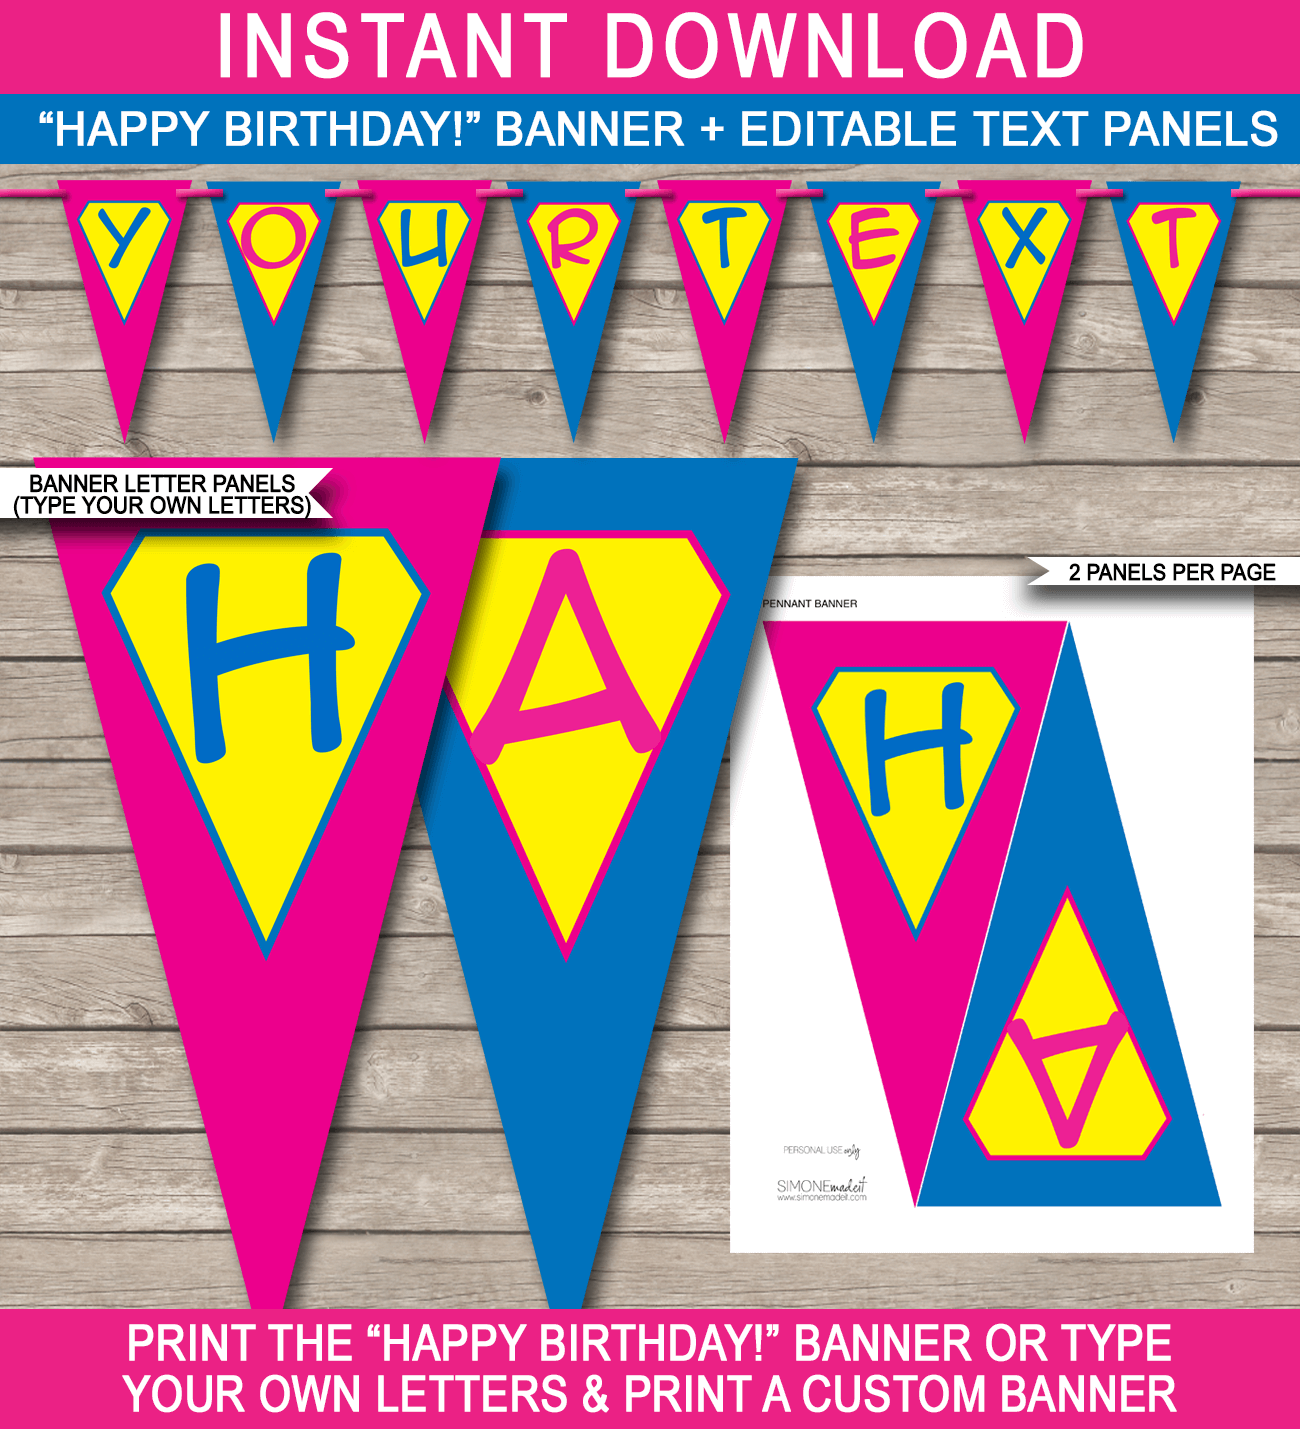 Printable Supergirl Pennant Banner Template - Girl Superhero Bunting - Happy Birthday Banner - Birthday Party - DIY Editable Text - INSTANT DOWNLOAD $4.50 via simonemadeit.com